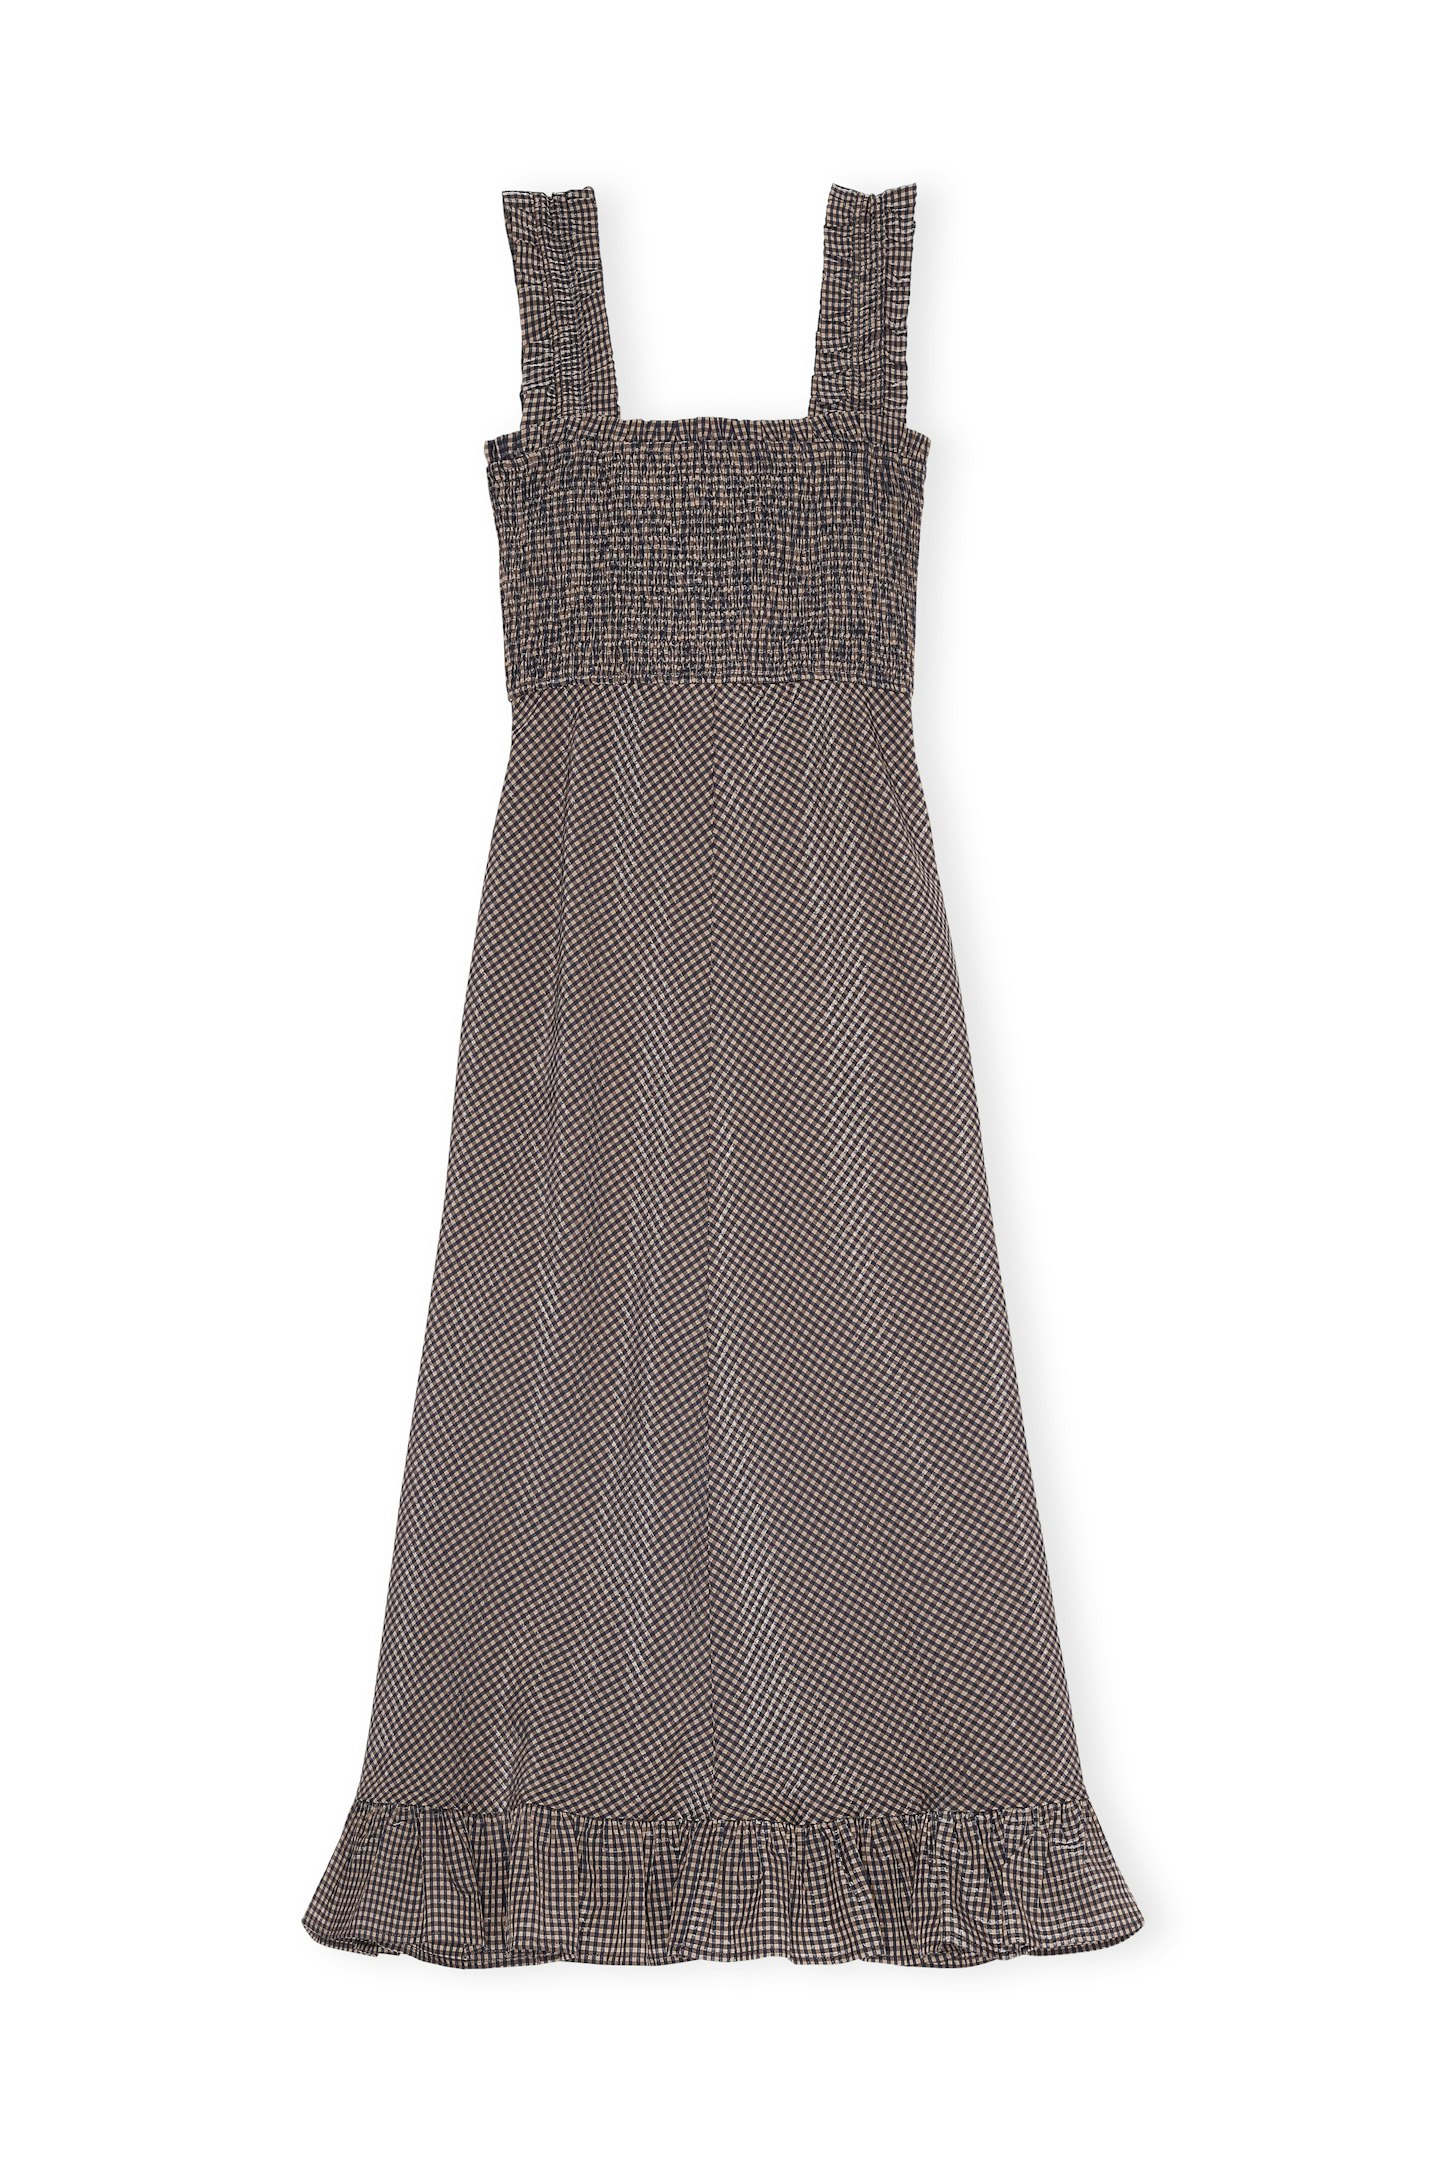 Ganni, Sleeveless Seersucker Maxi Dress, £210